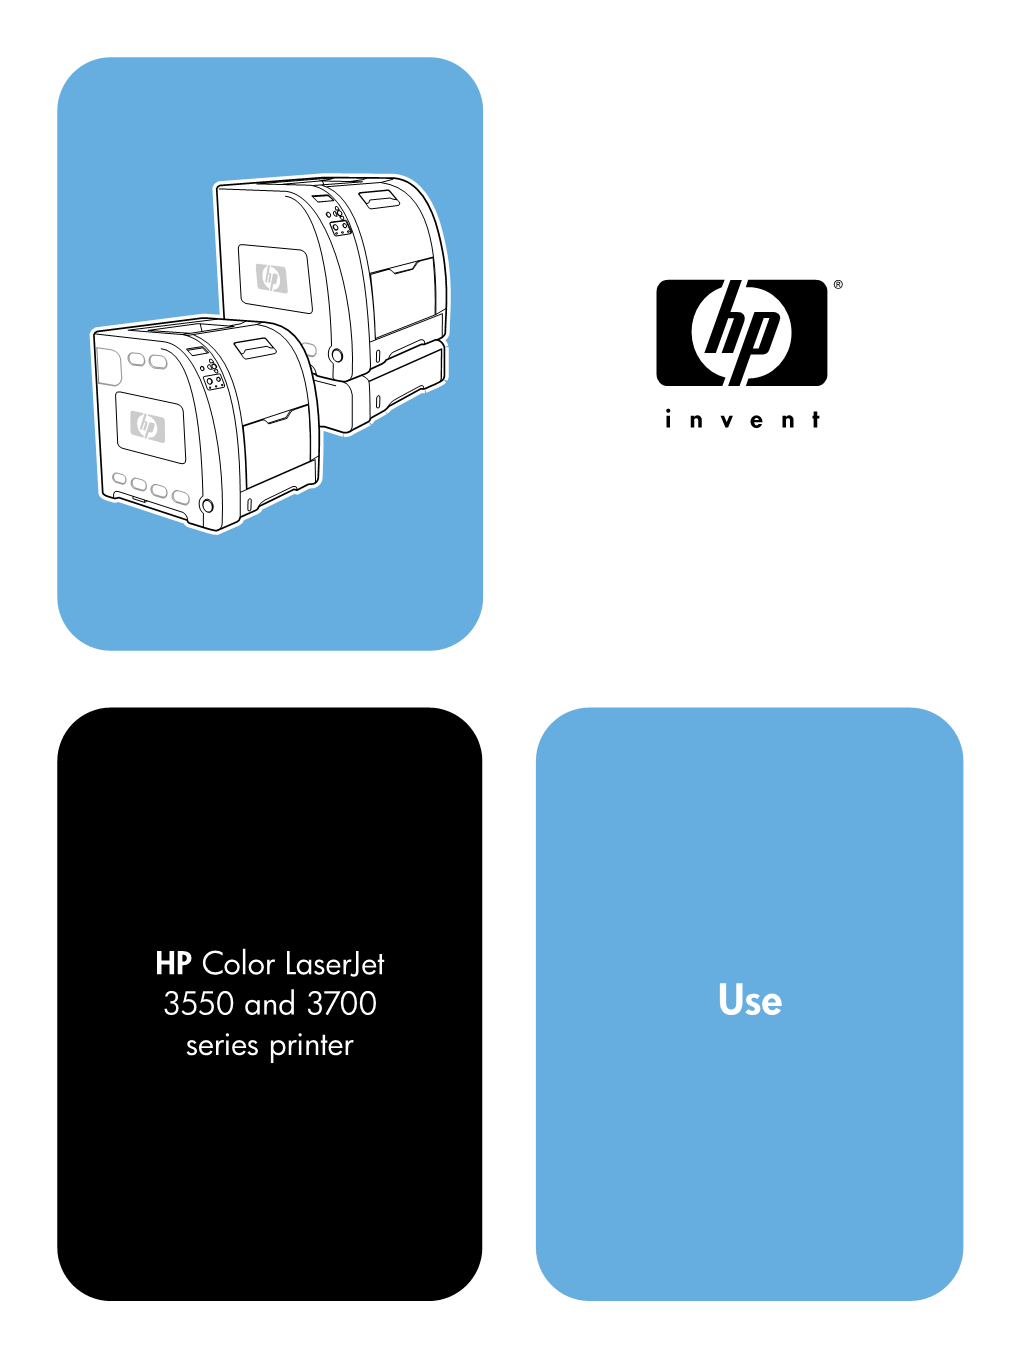 HP Color Laserjet 3550 and 3700 Series Printer